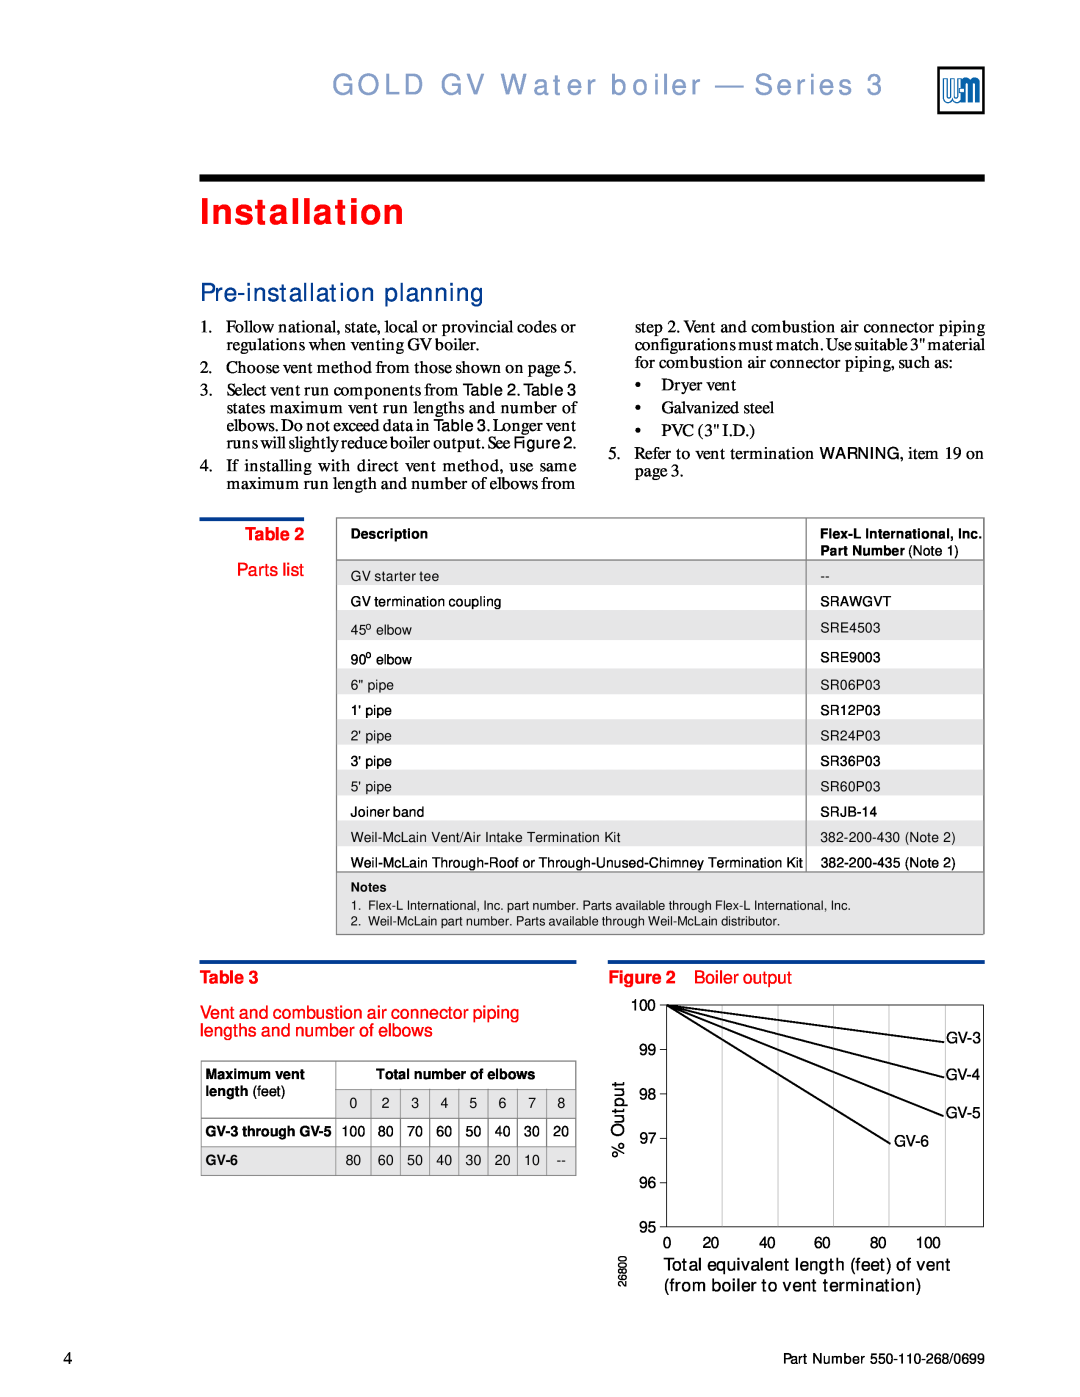 Weil-McLain STAR-34 manual Installation, Pre-installationplanning, Parts list, Boiler output, Output 